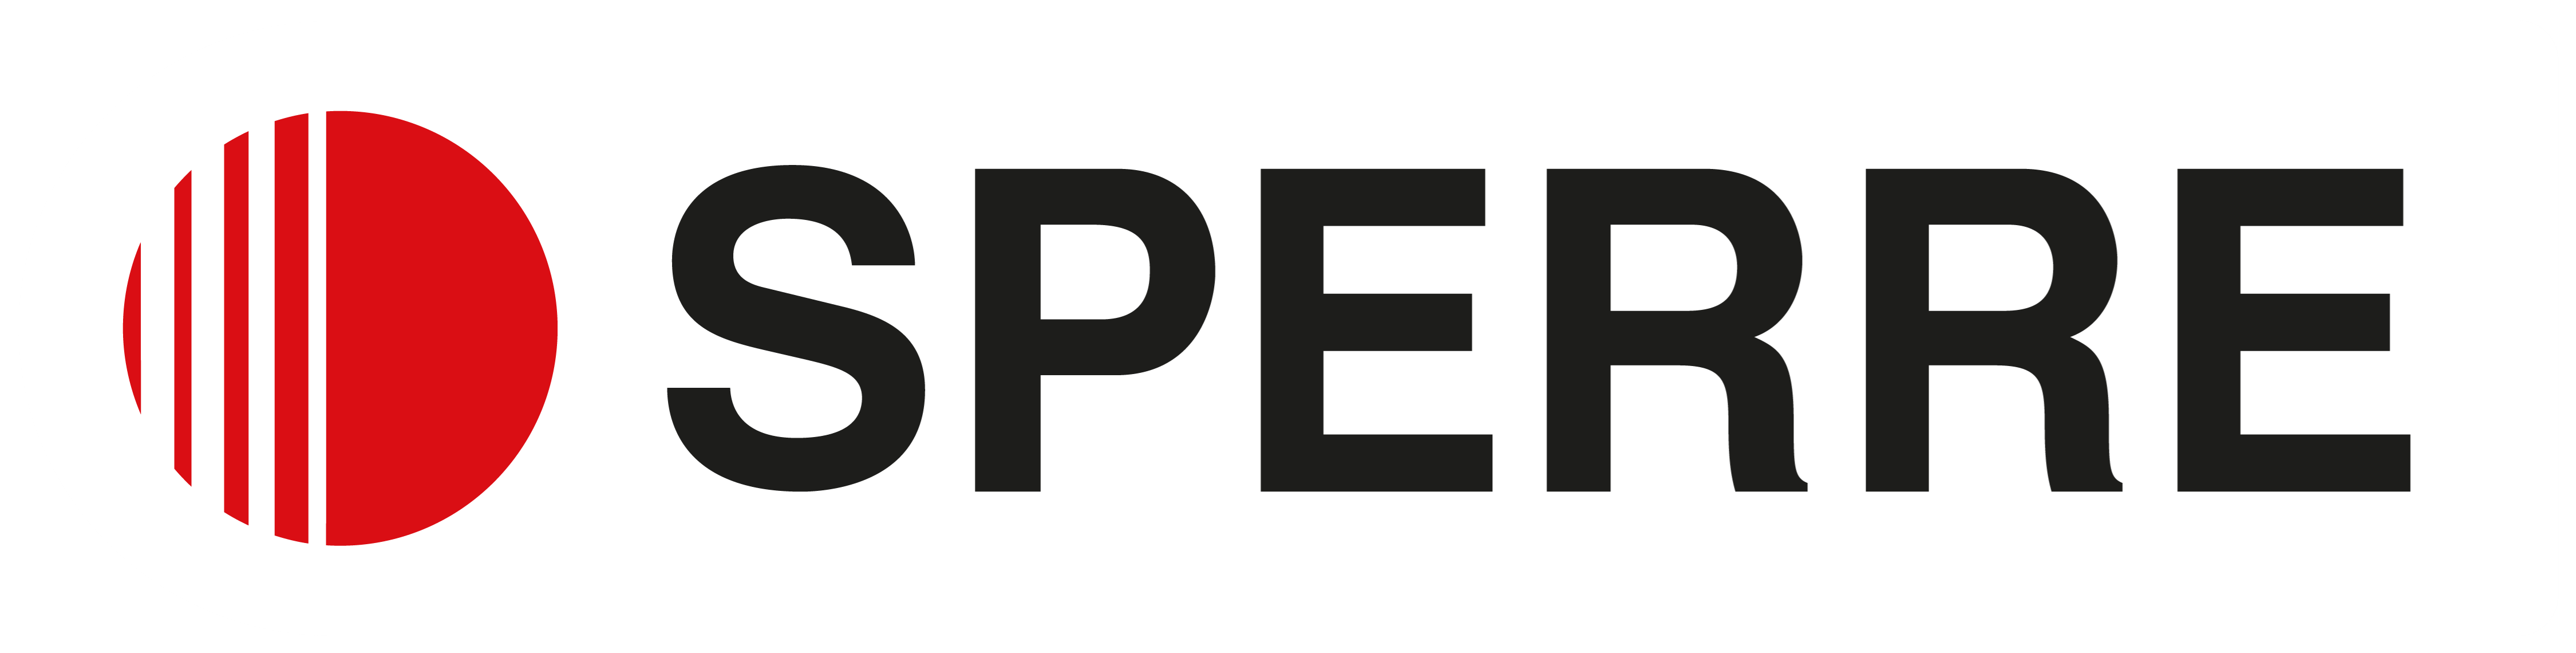 Sperre Industrier AS logo.png